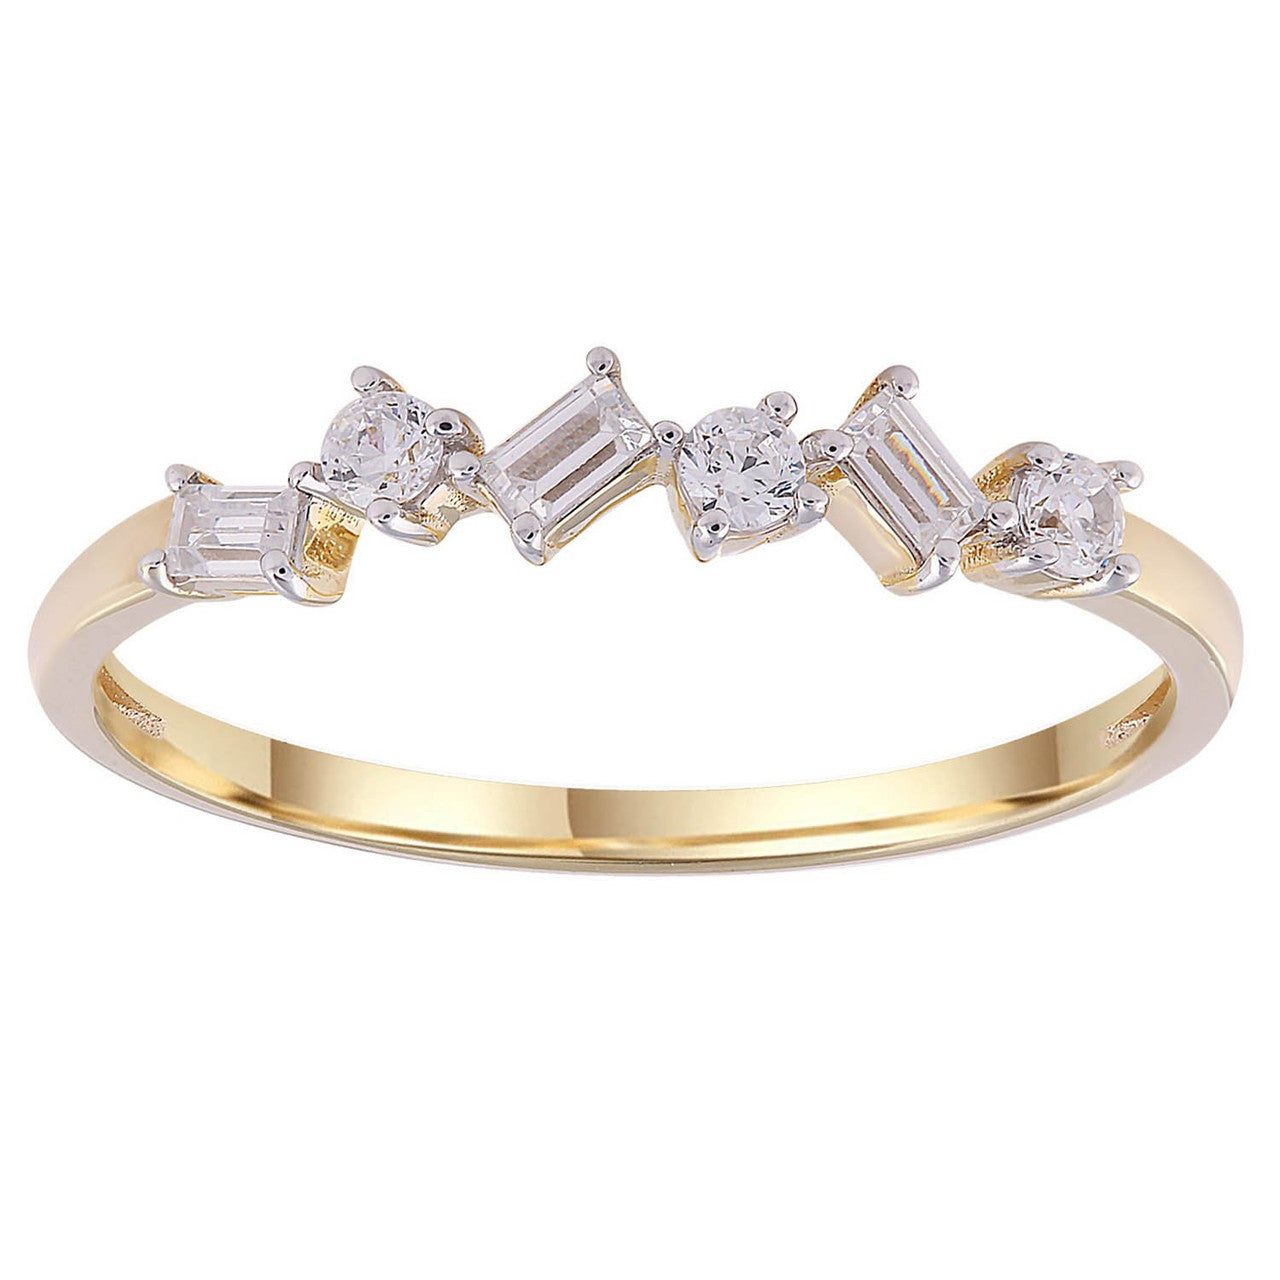 Ice Jewellery Ring with 0.18ct Diamonds in 9K Yellow Gold -  R-41515-018-Y | Ice Jewellery Australia